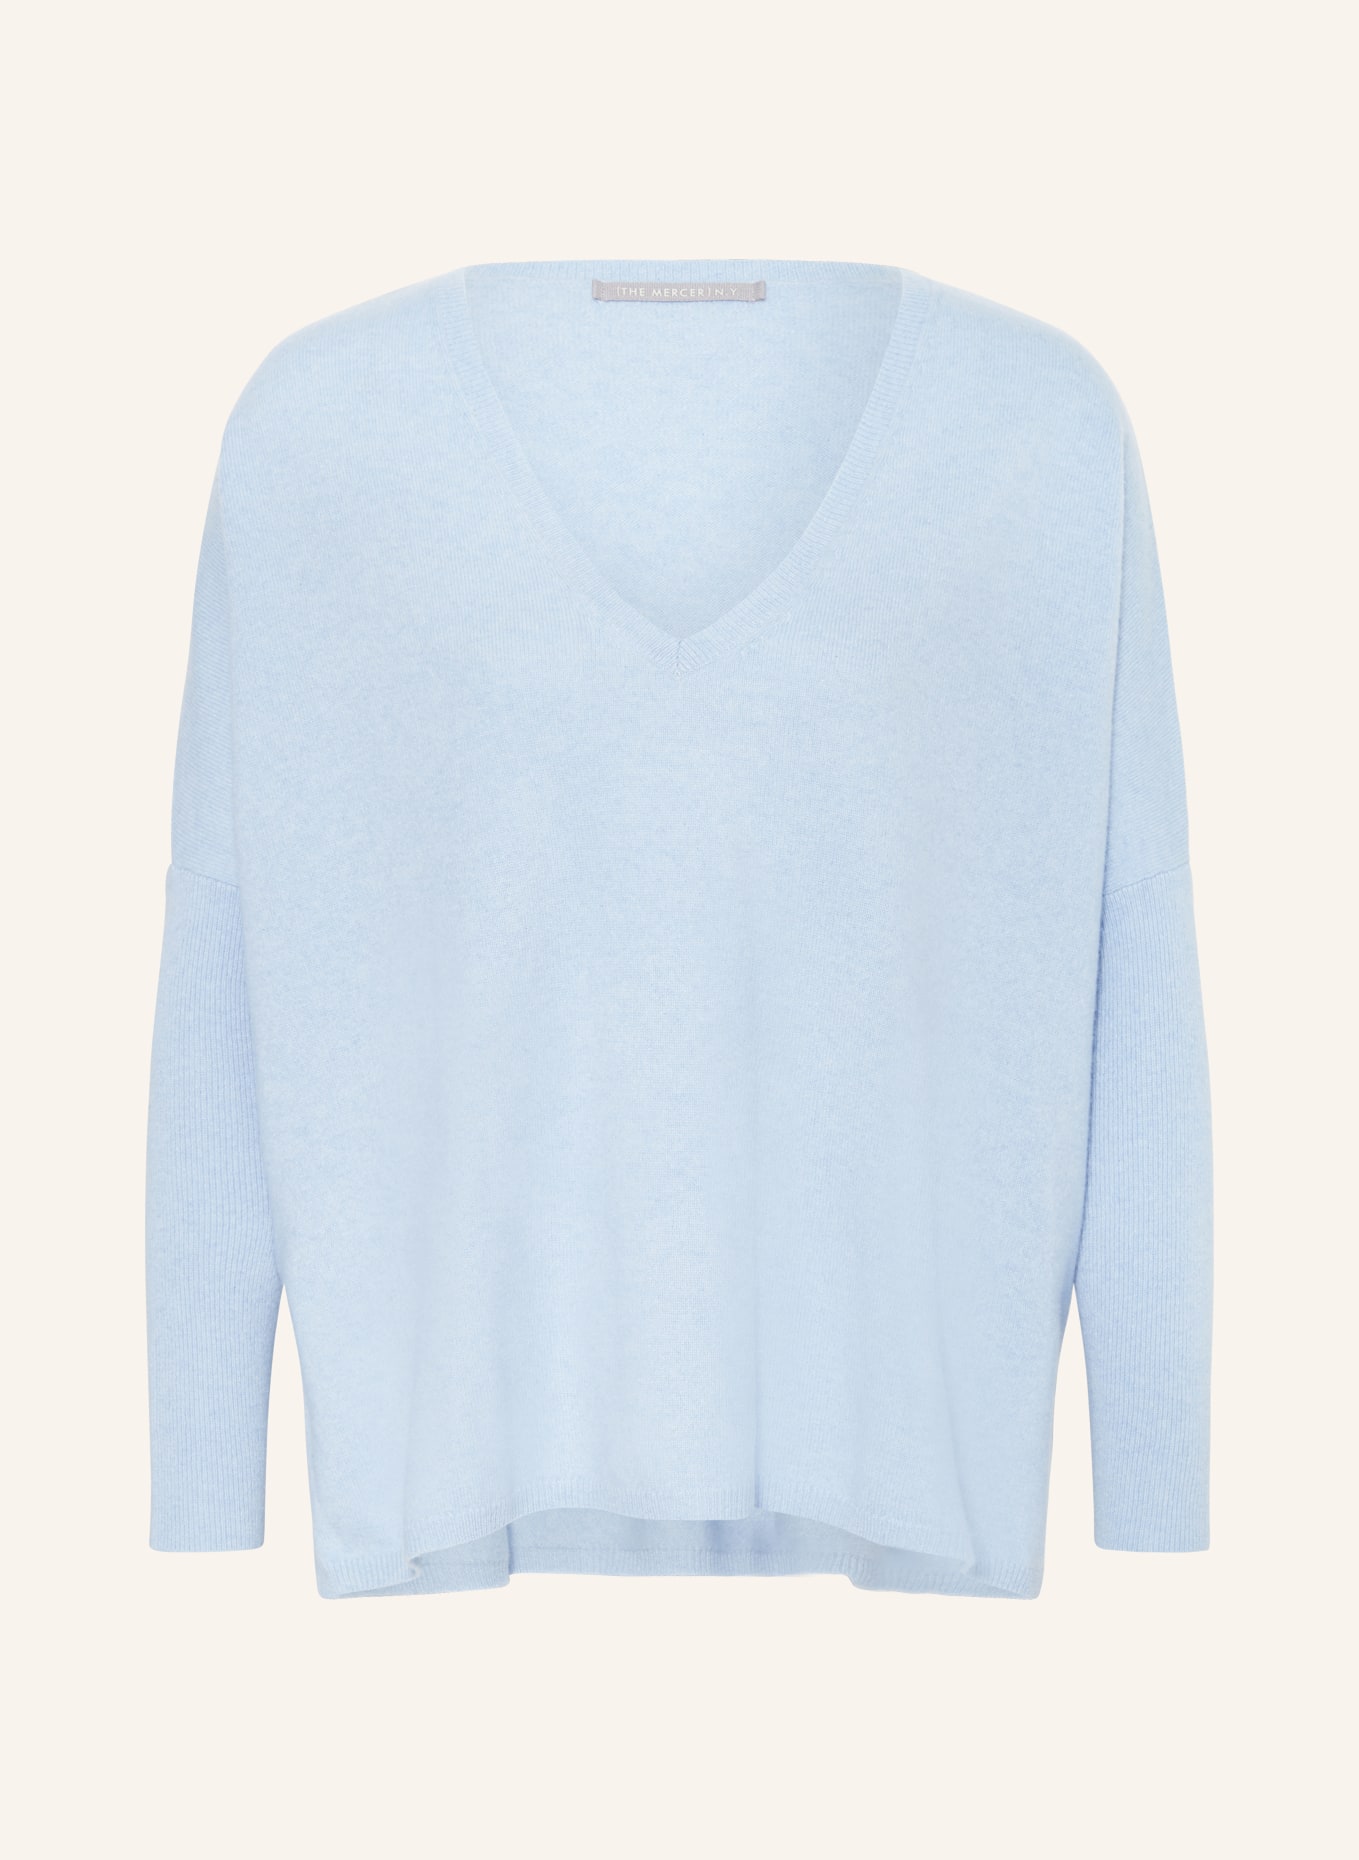 (THE MERCER) N.Y. Cashmere sweater, Color: LIGHT BLUE (Image 1)